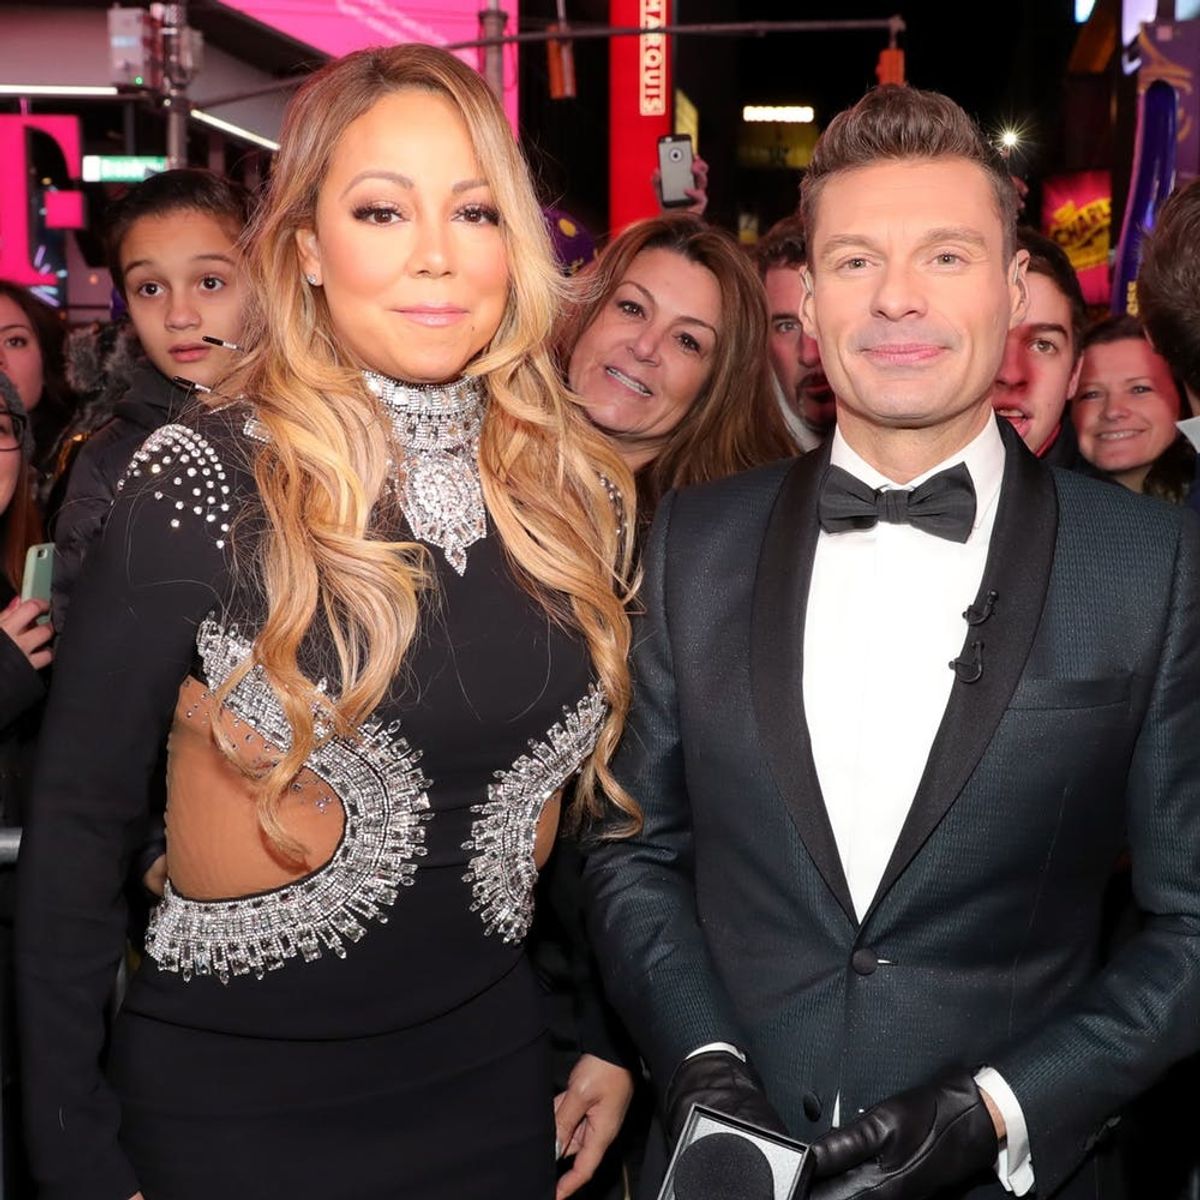 Ryan Seacrest Says He’s “Anxious” Over Mariah Carey’s Return to ‘New Year’s Rockin’ Eve’